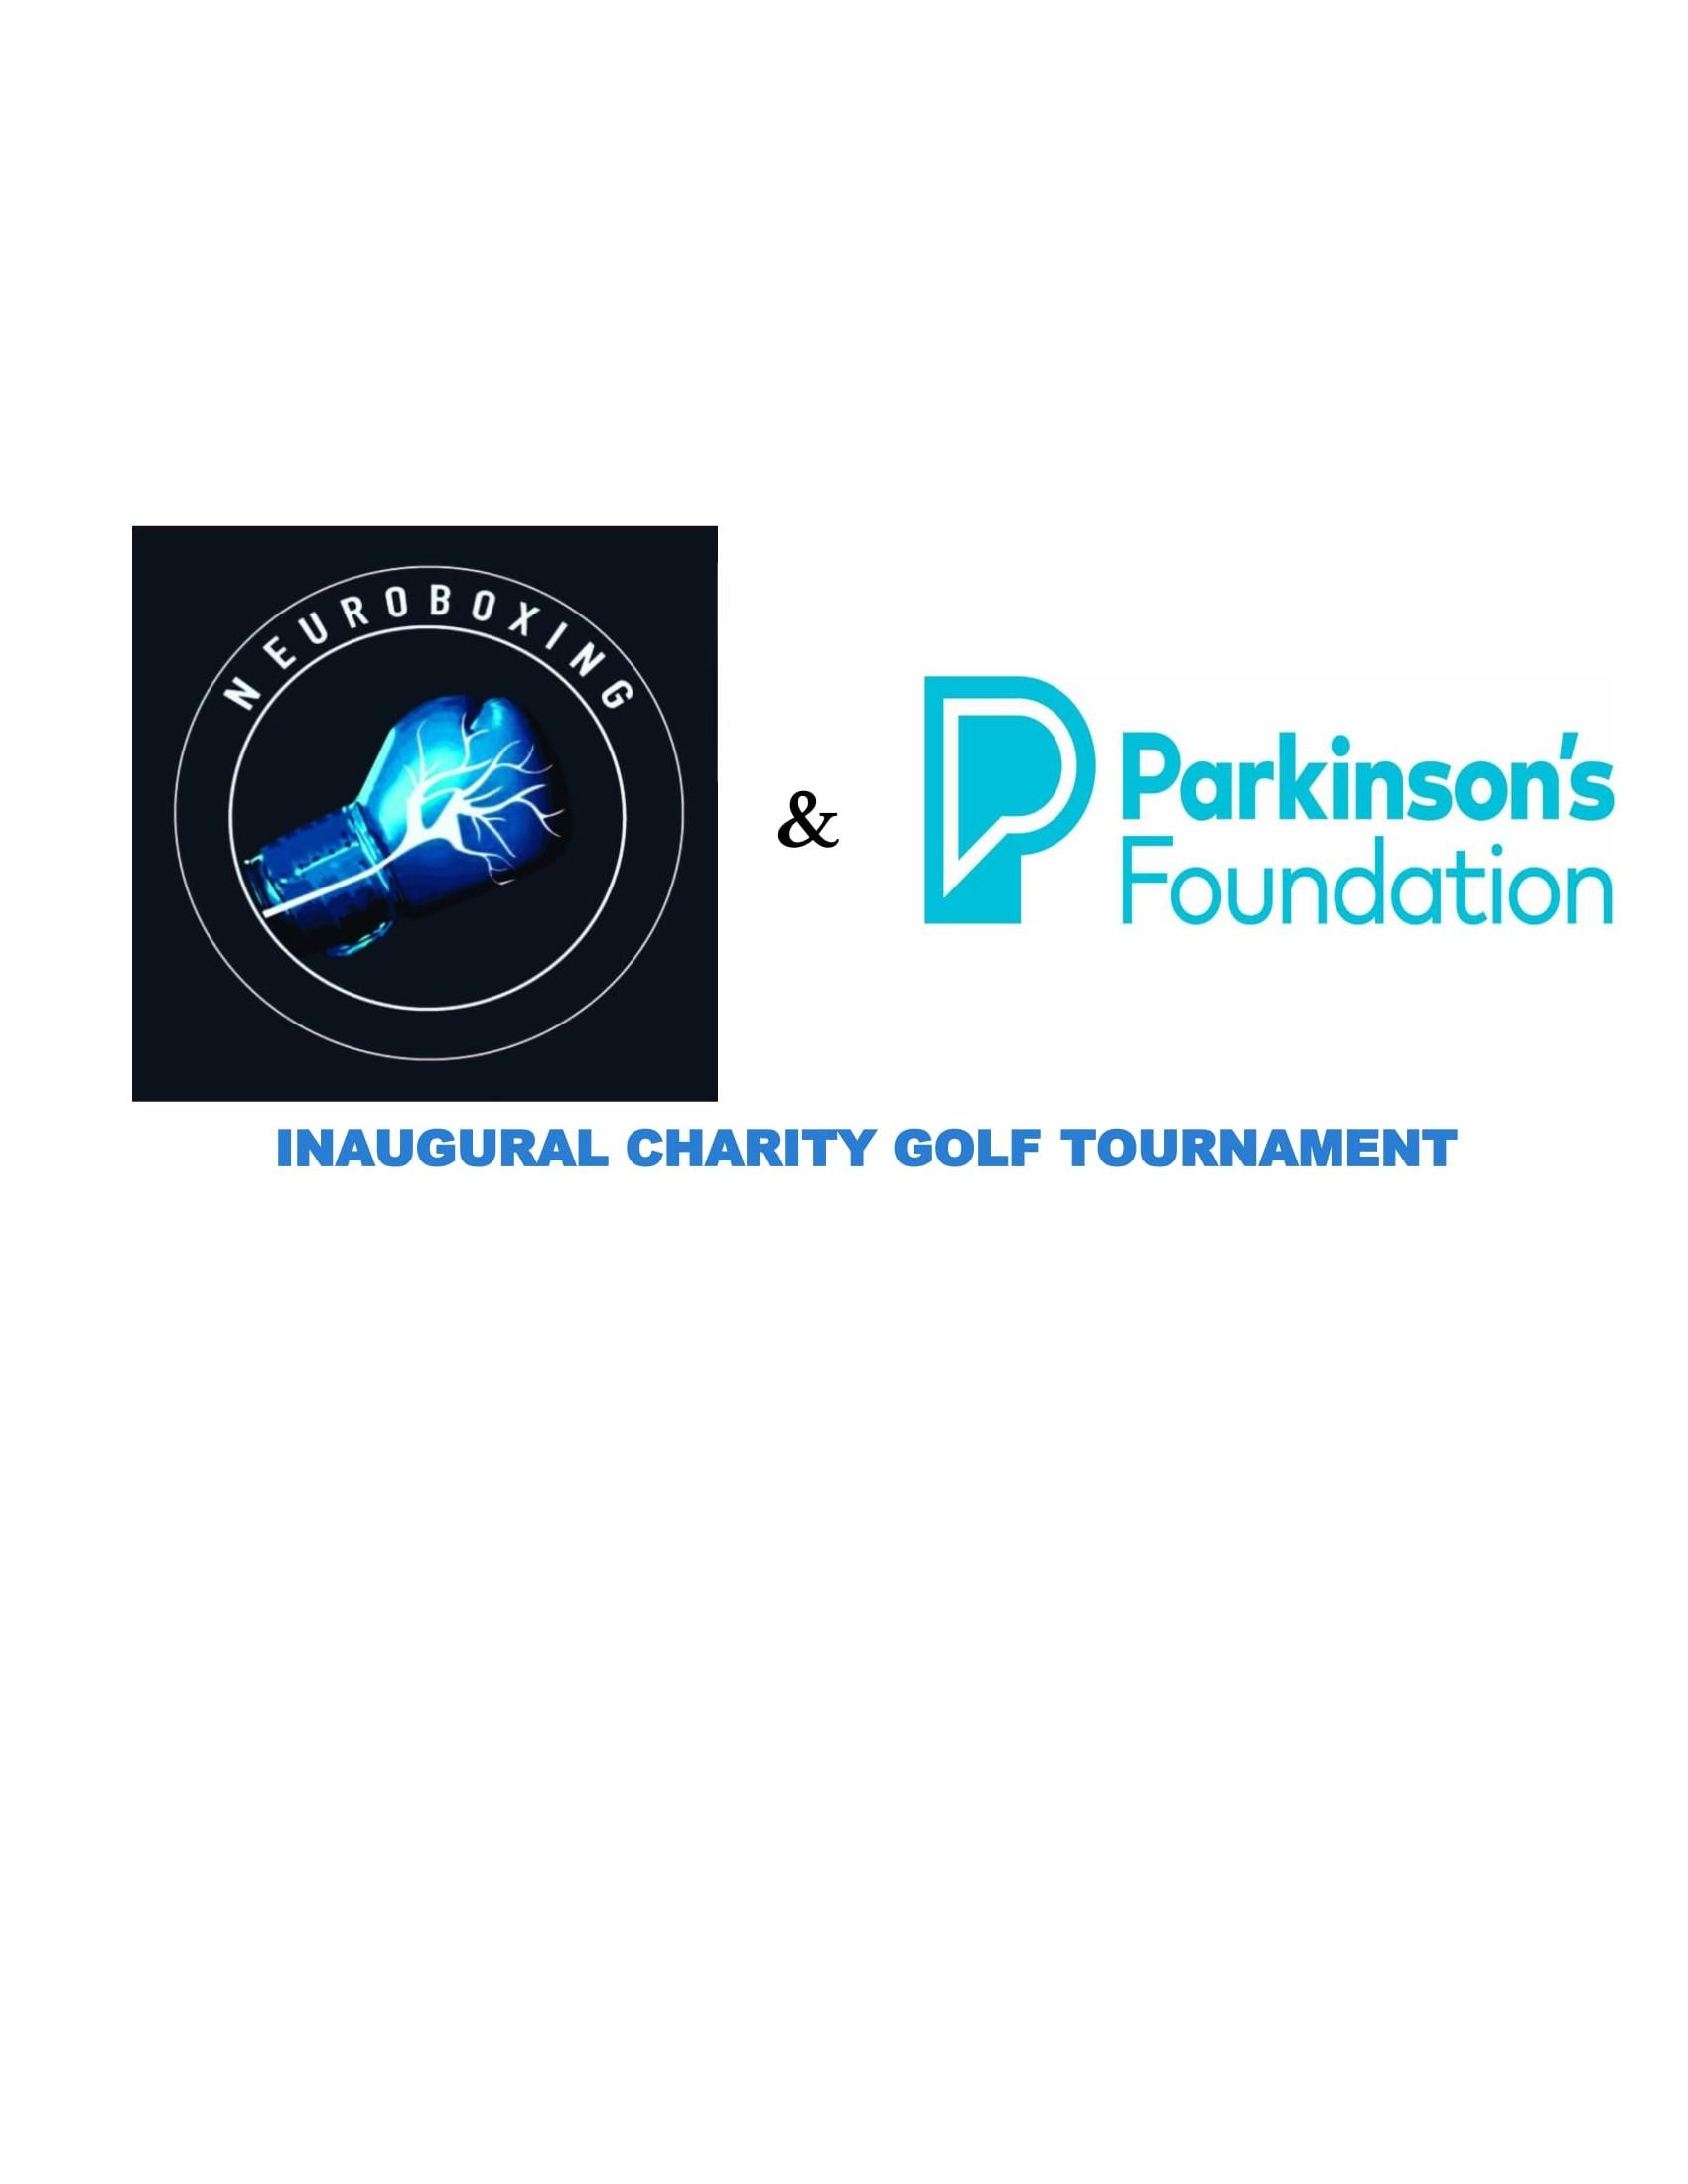 Neuroboxing & Parkinson’s Foundation Present Their Inaugural Charity Golf Tournament!